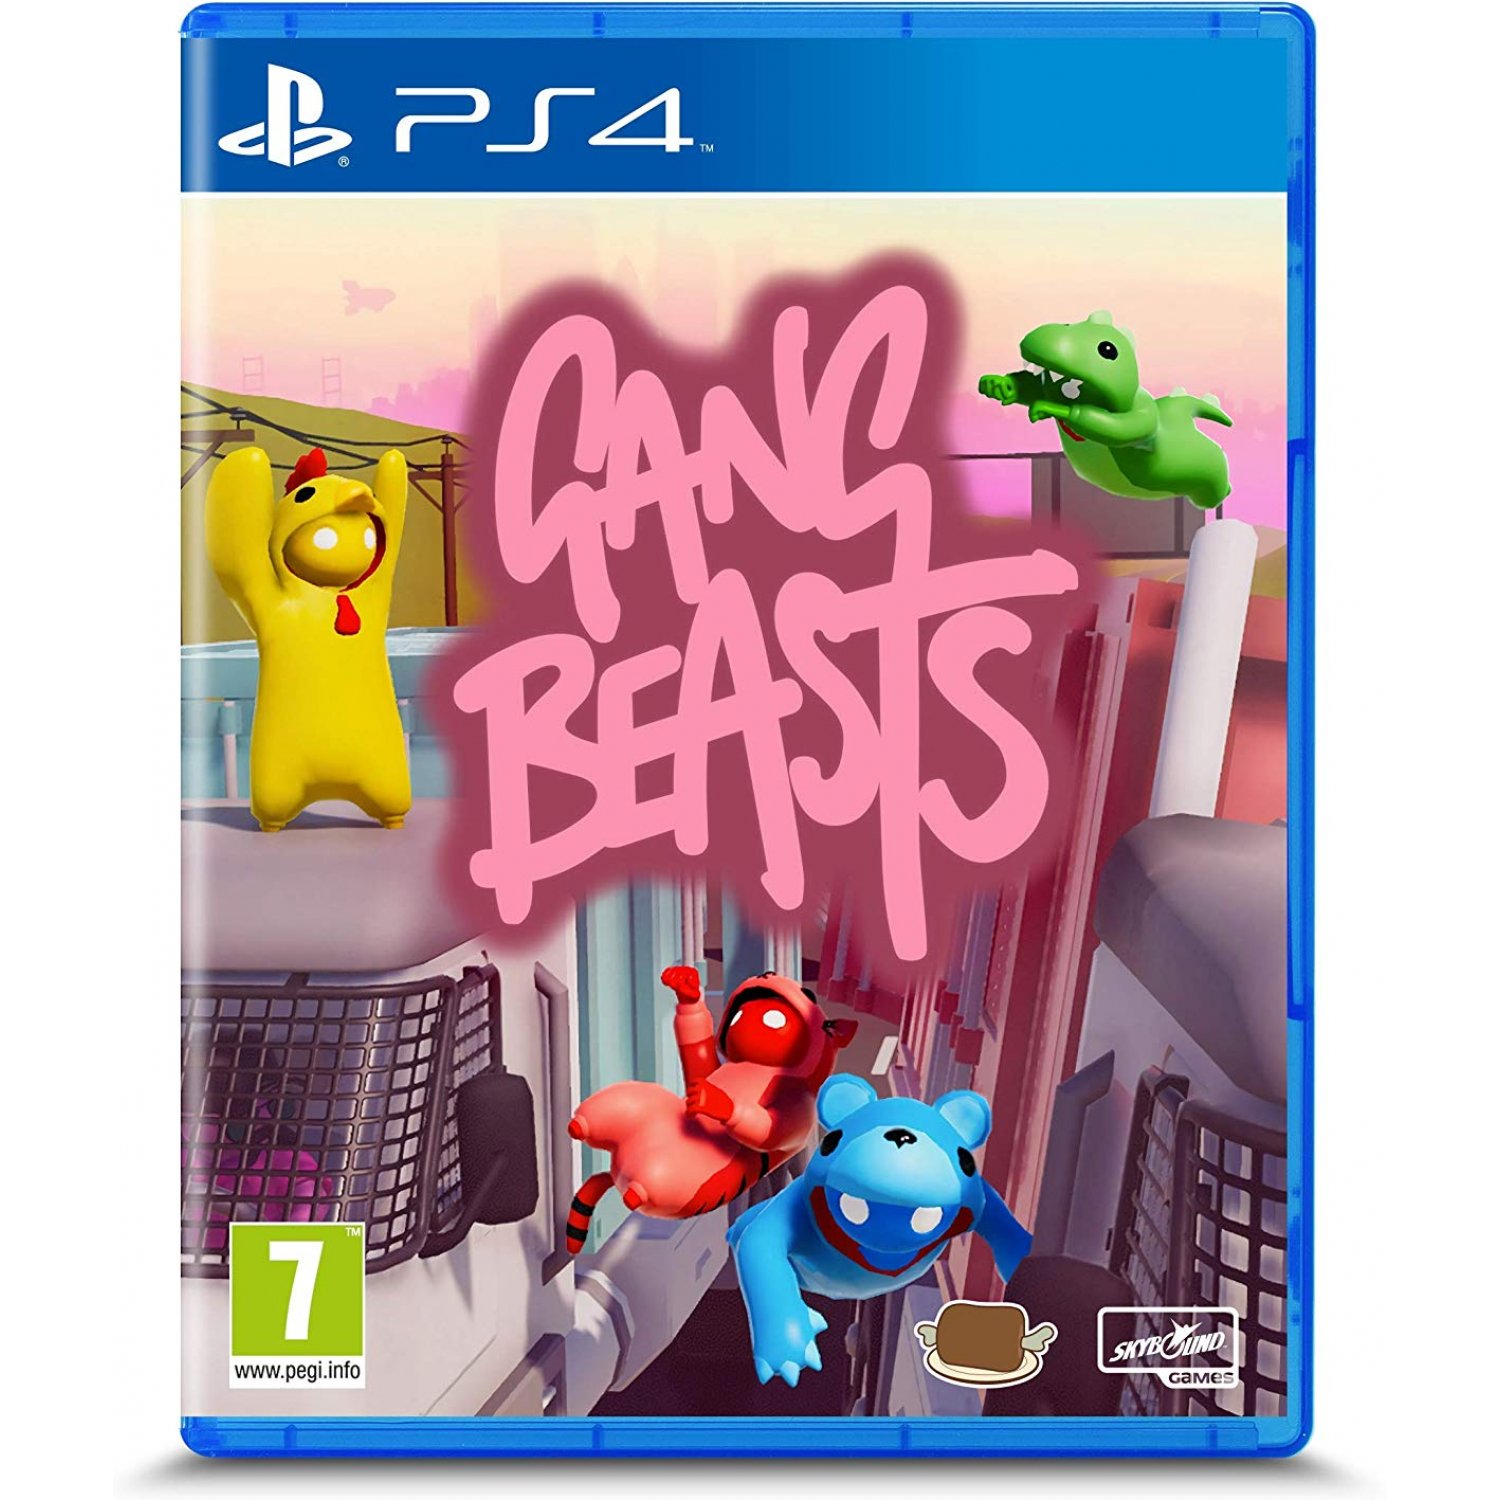 gang beasts 2 download